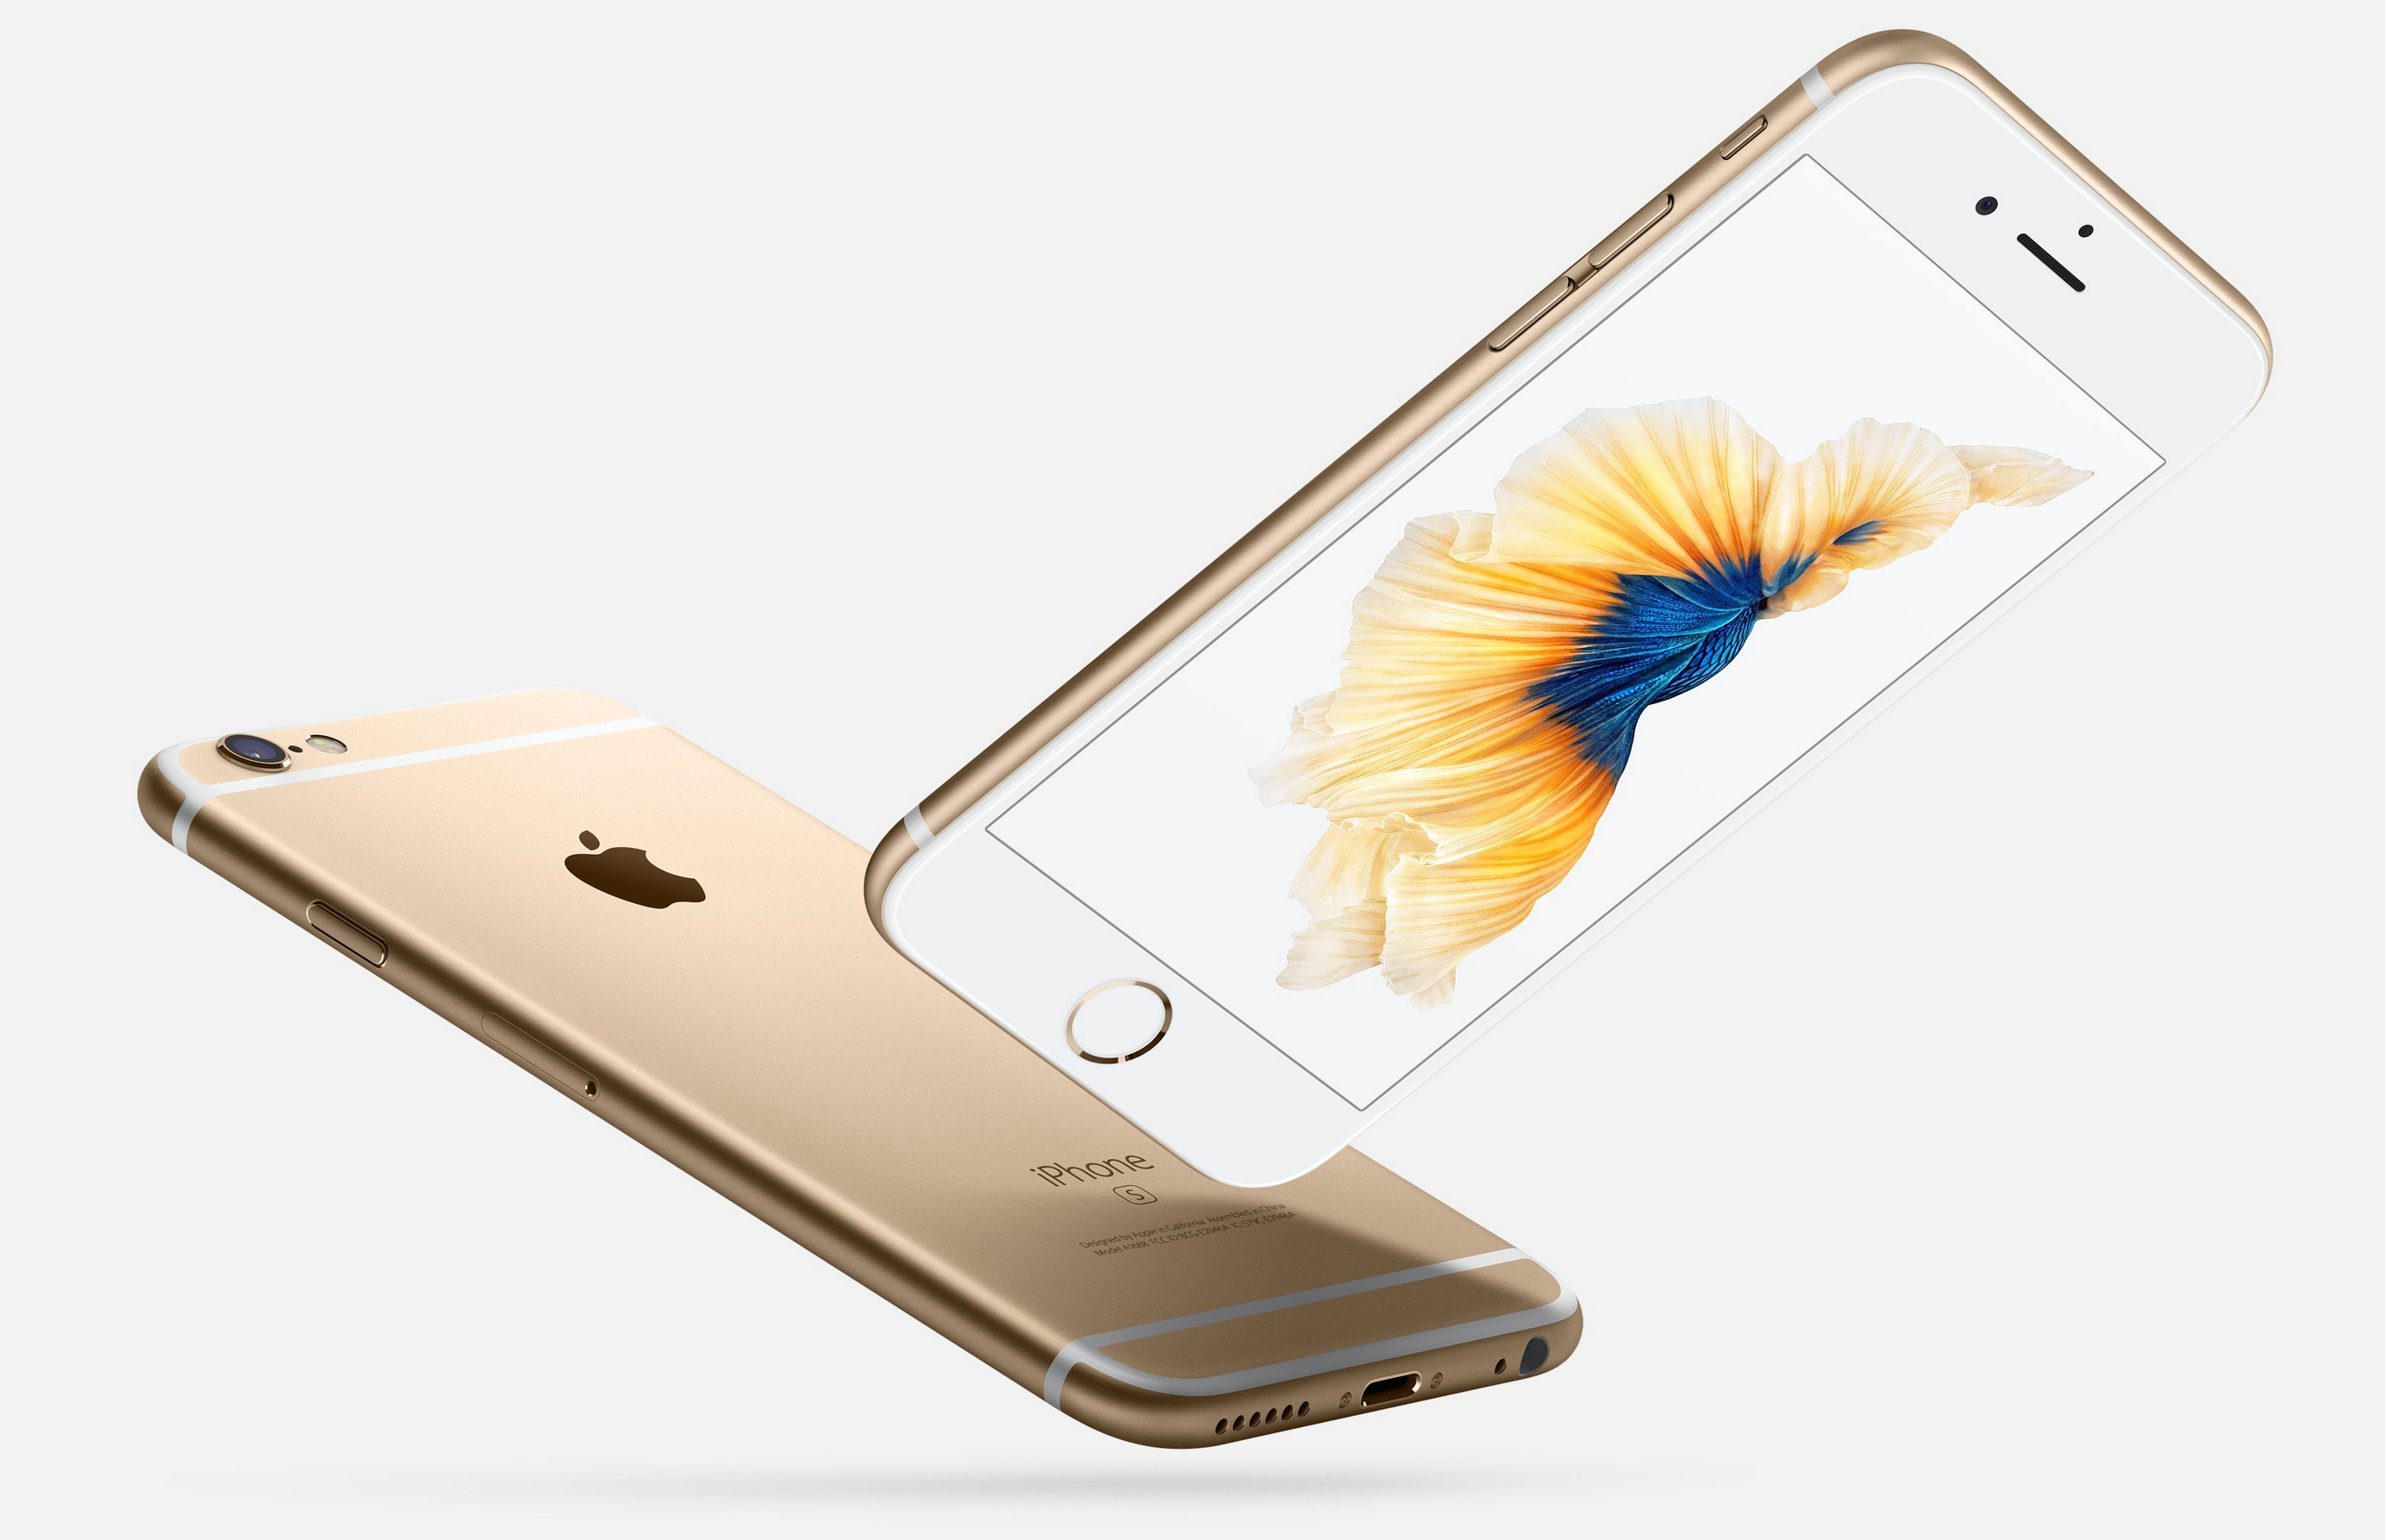 Apple iPhone 6S Gold